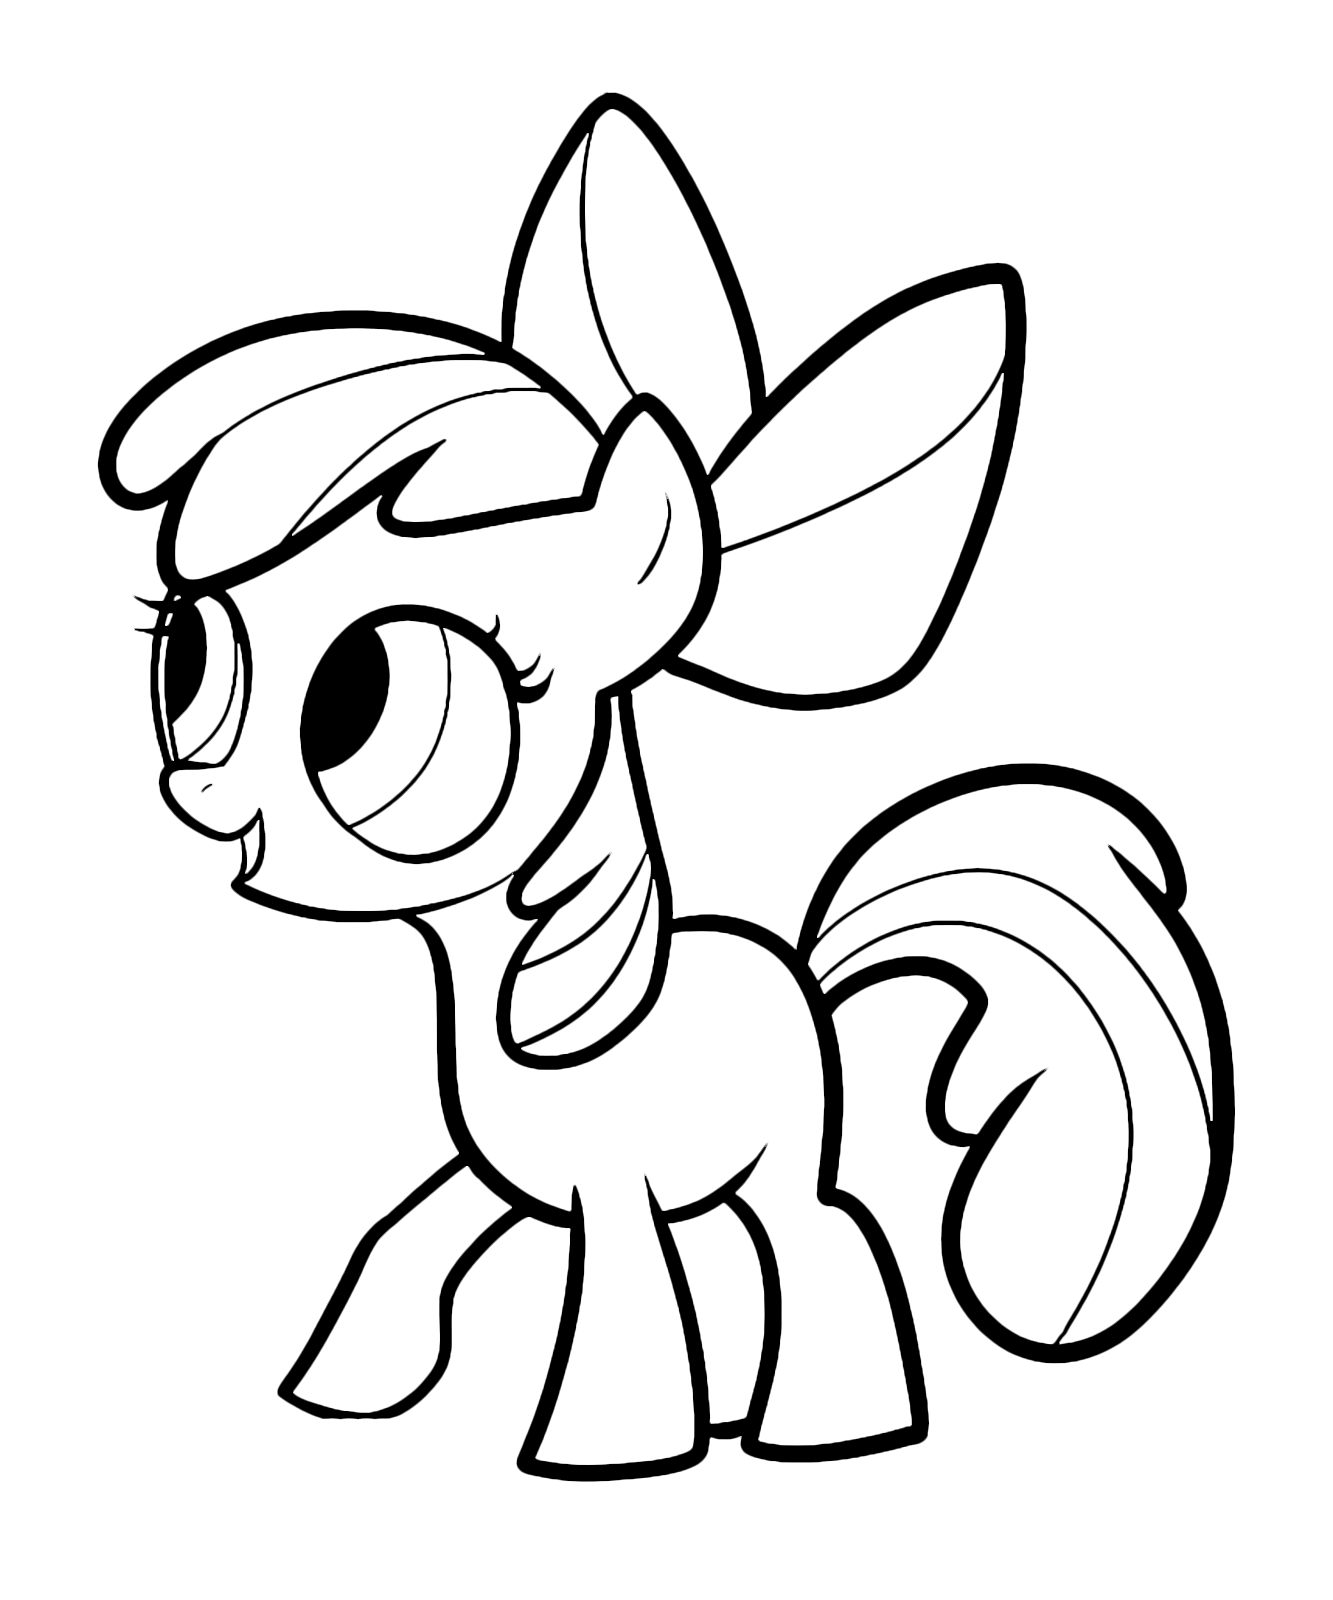 My Little Pony - Apple Bloom the sister of Applejack